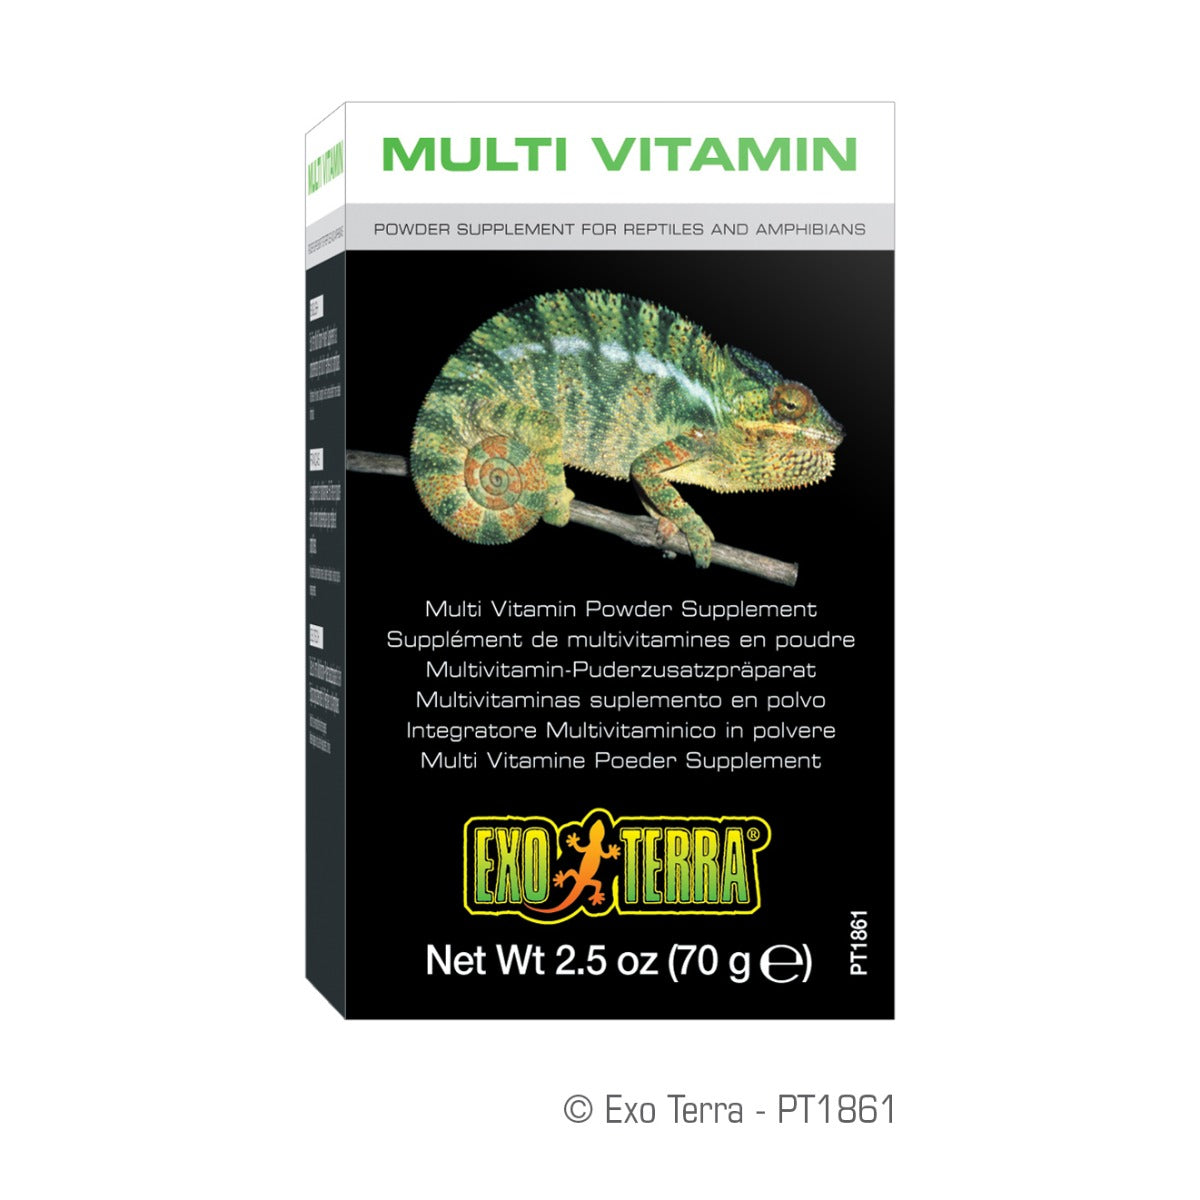 Exo Terra Multi Vitamin Powder Supplement - 1.1 oz - 30 g